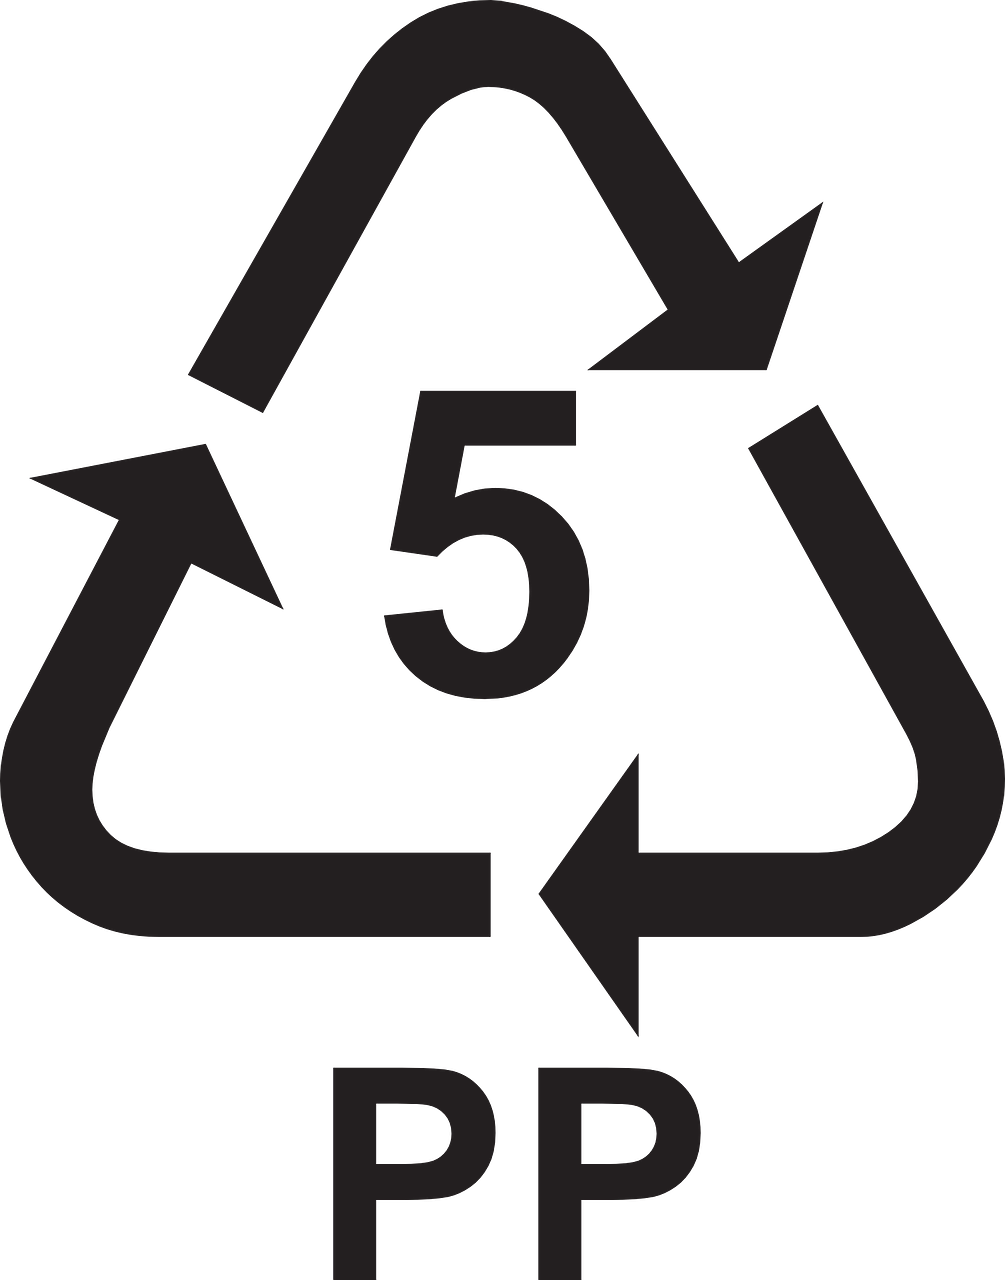 PP 5 recycling symbol.